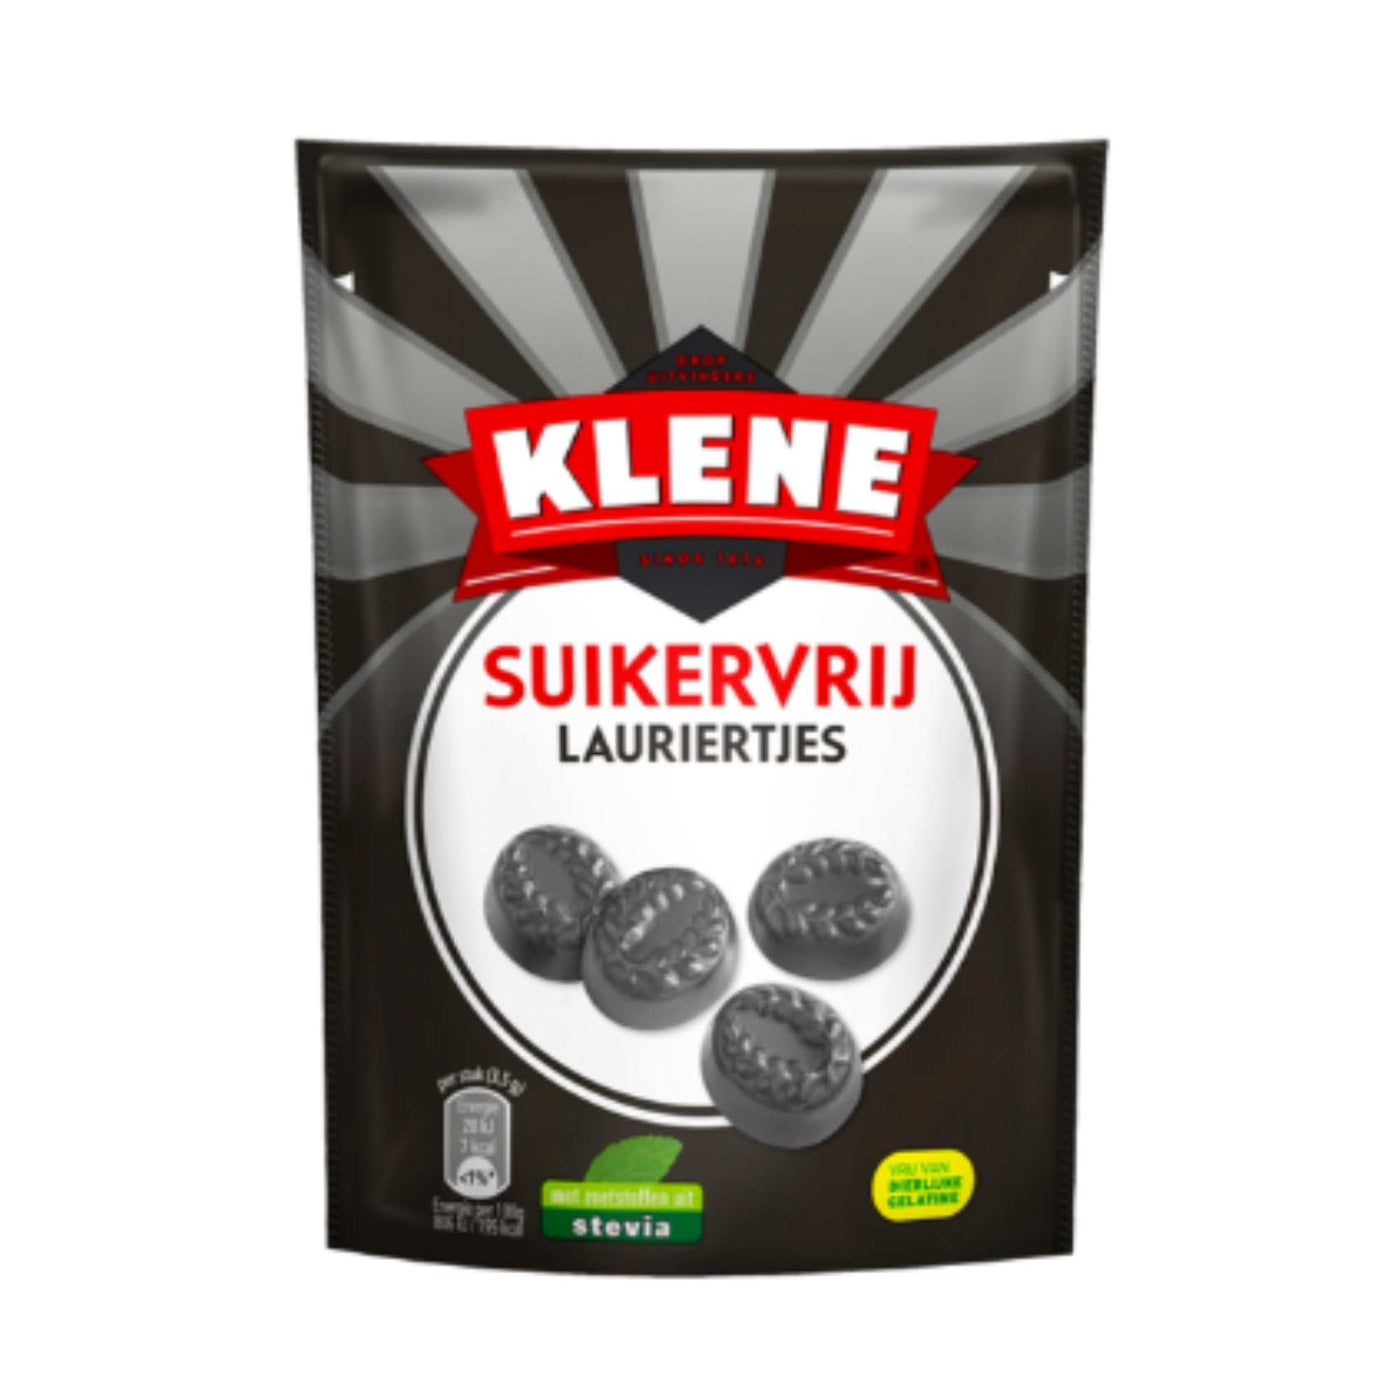 Klene Lauriertjes - Sugar Free Soft Bay Leaf Flavoured Liquorice